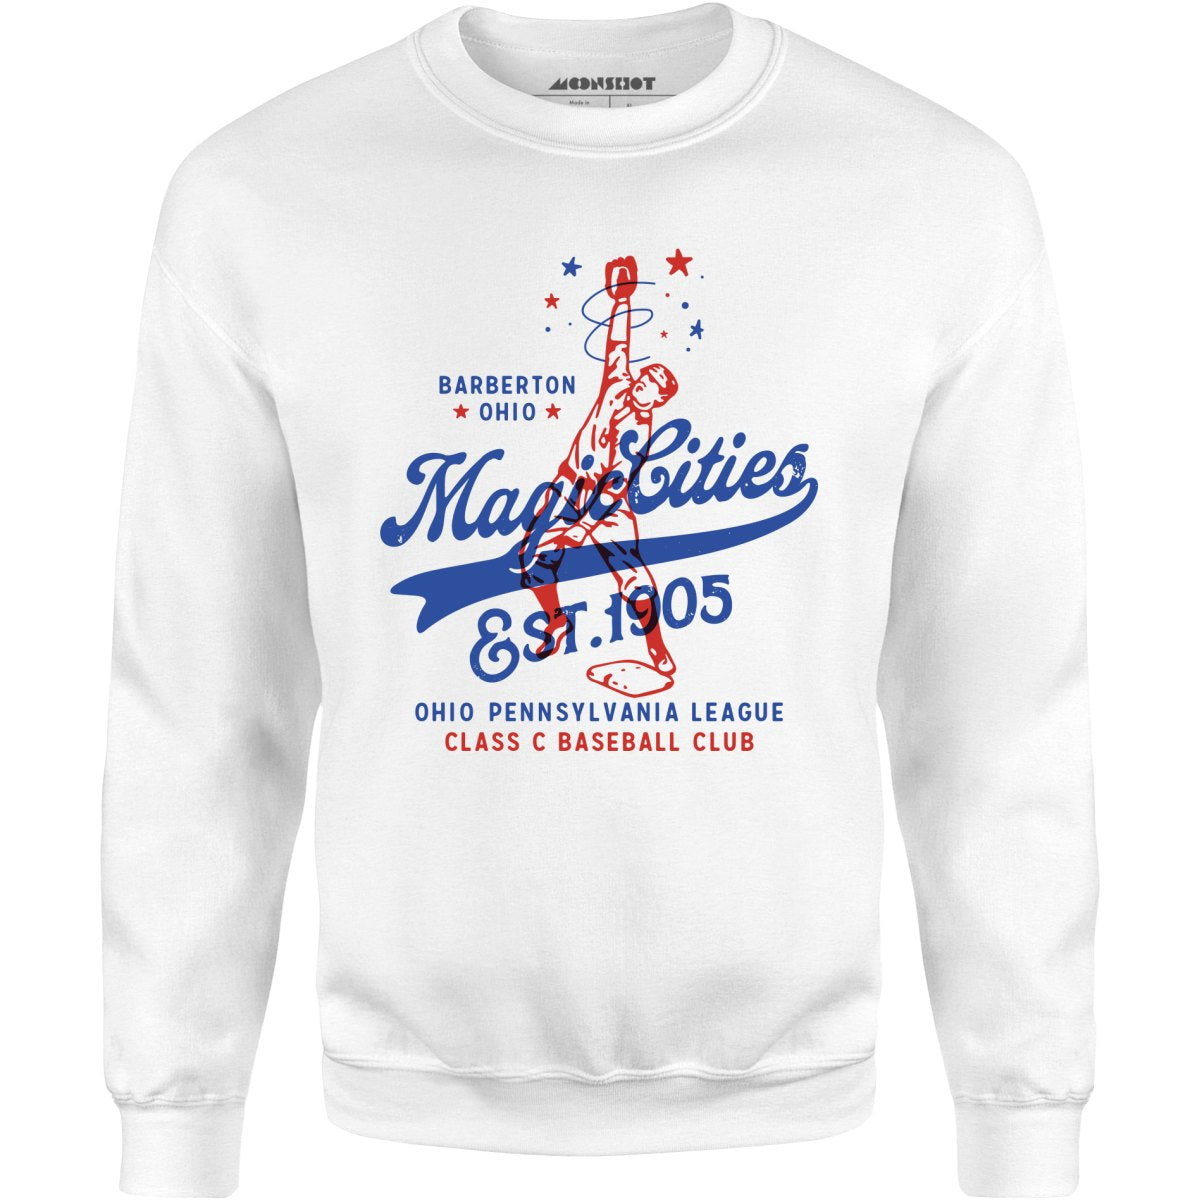 Barberton Magic Cities - Ohio - Vintage Defunct Baseball Teams - Unisex Sweatshirt